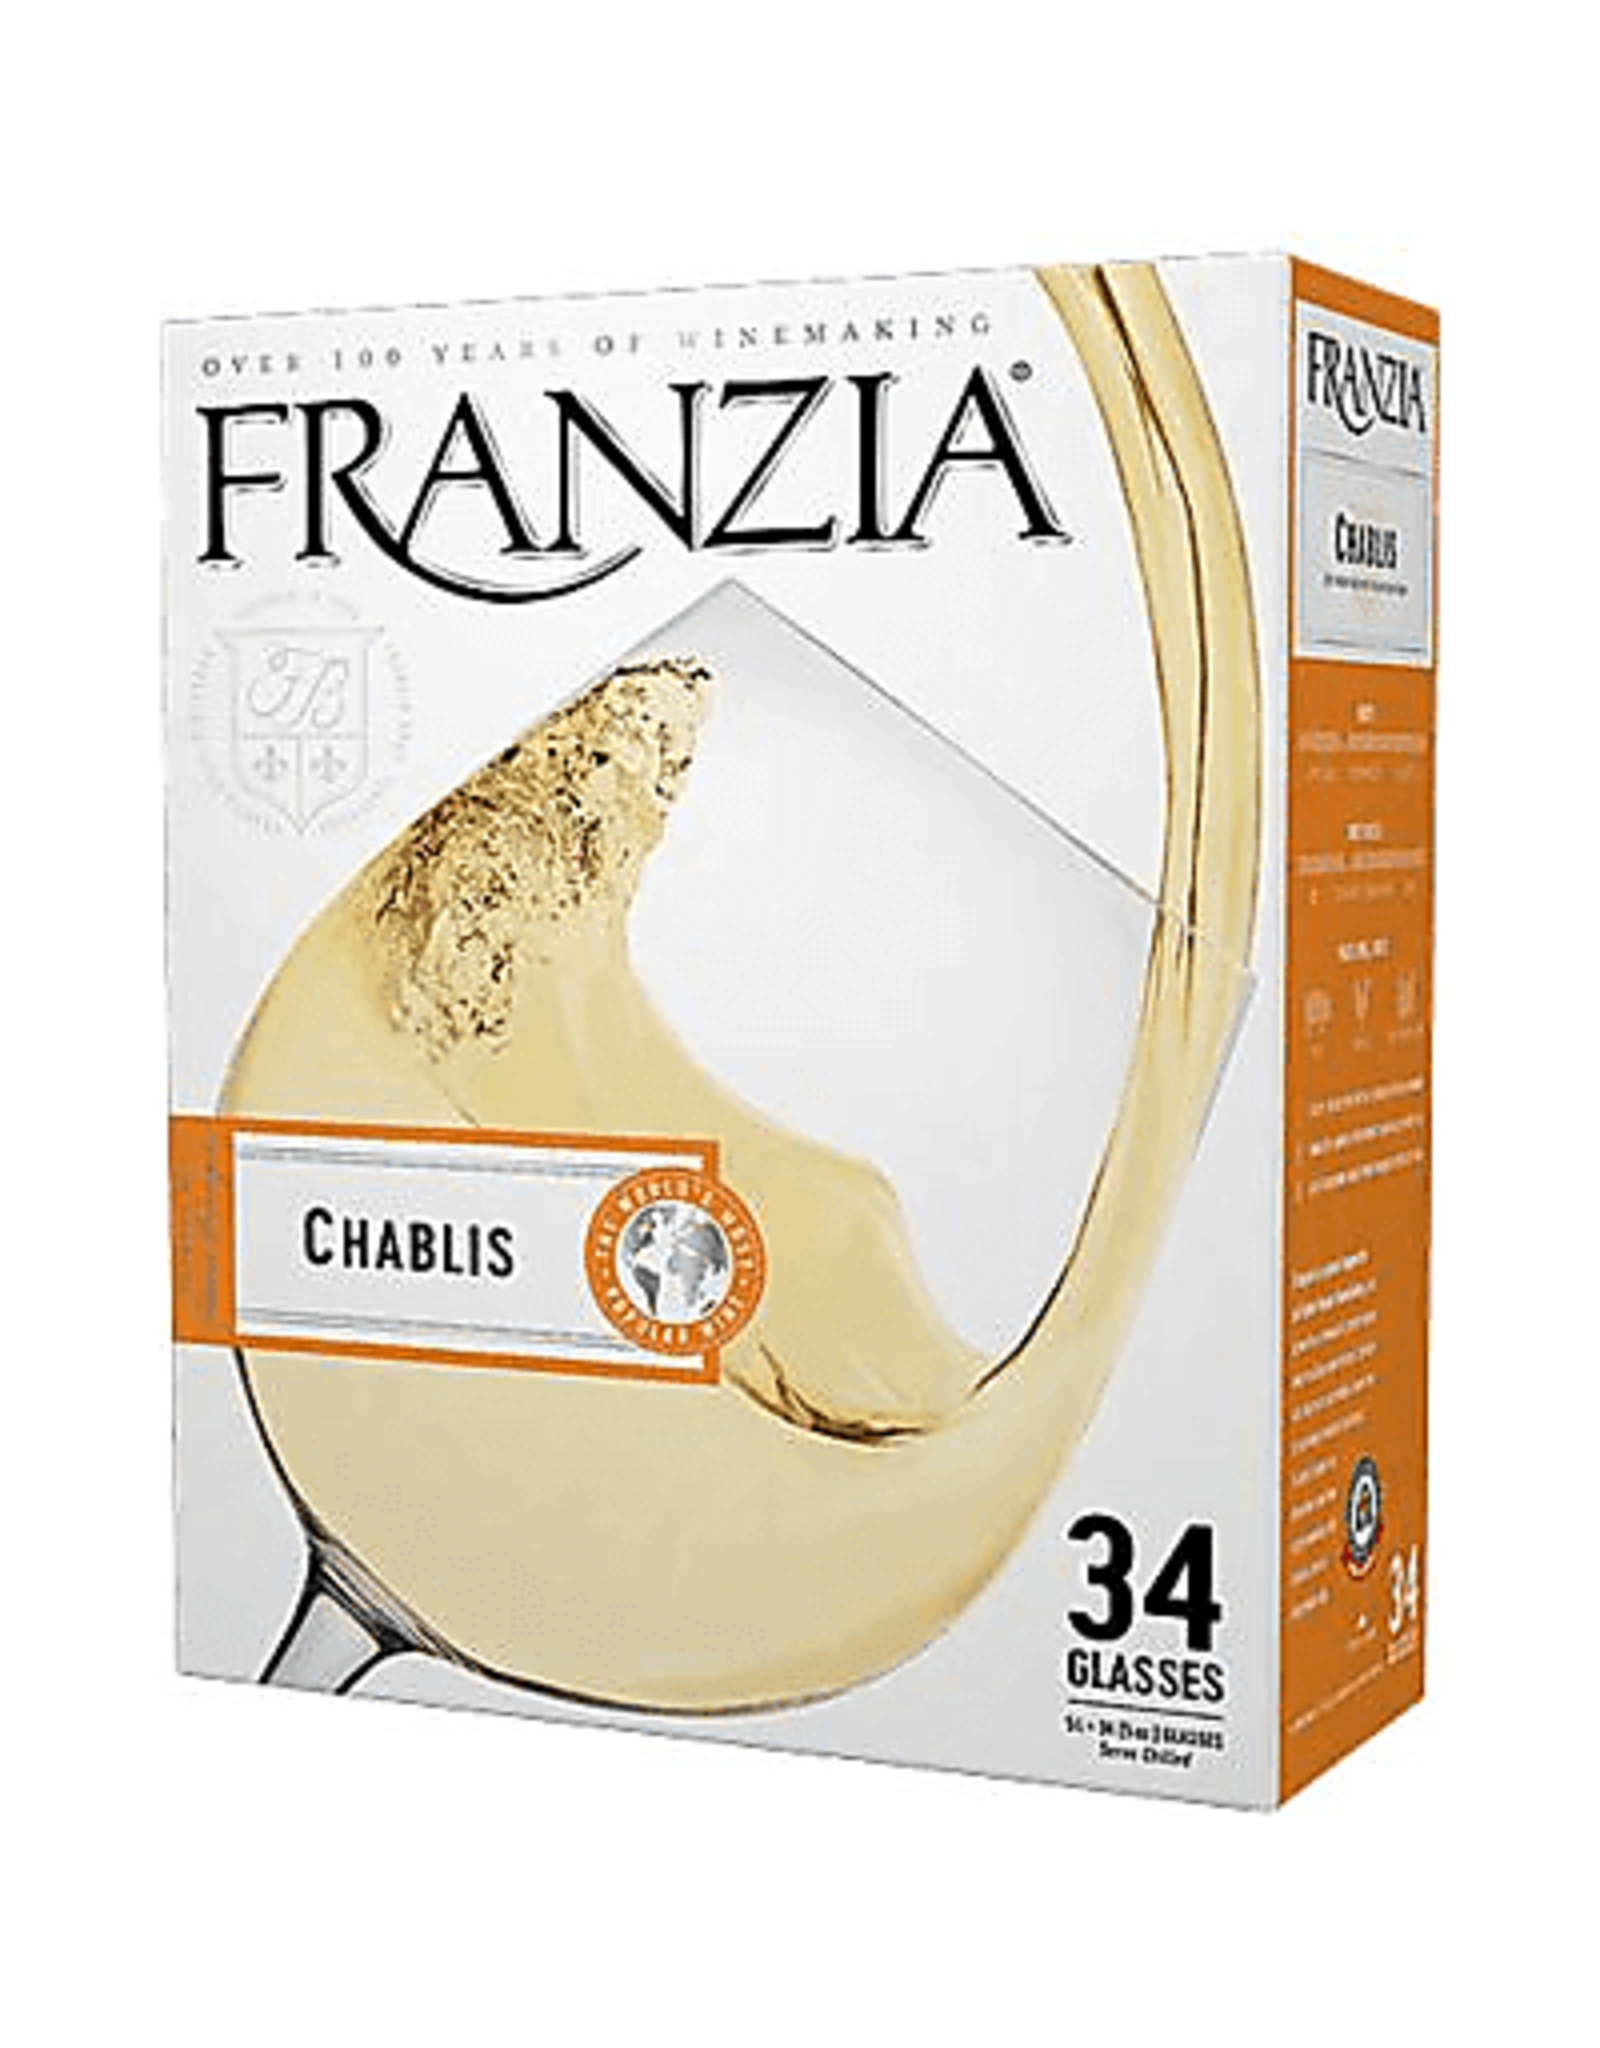 Franzia Chablis 5L